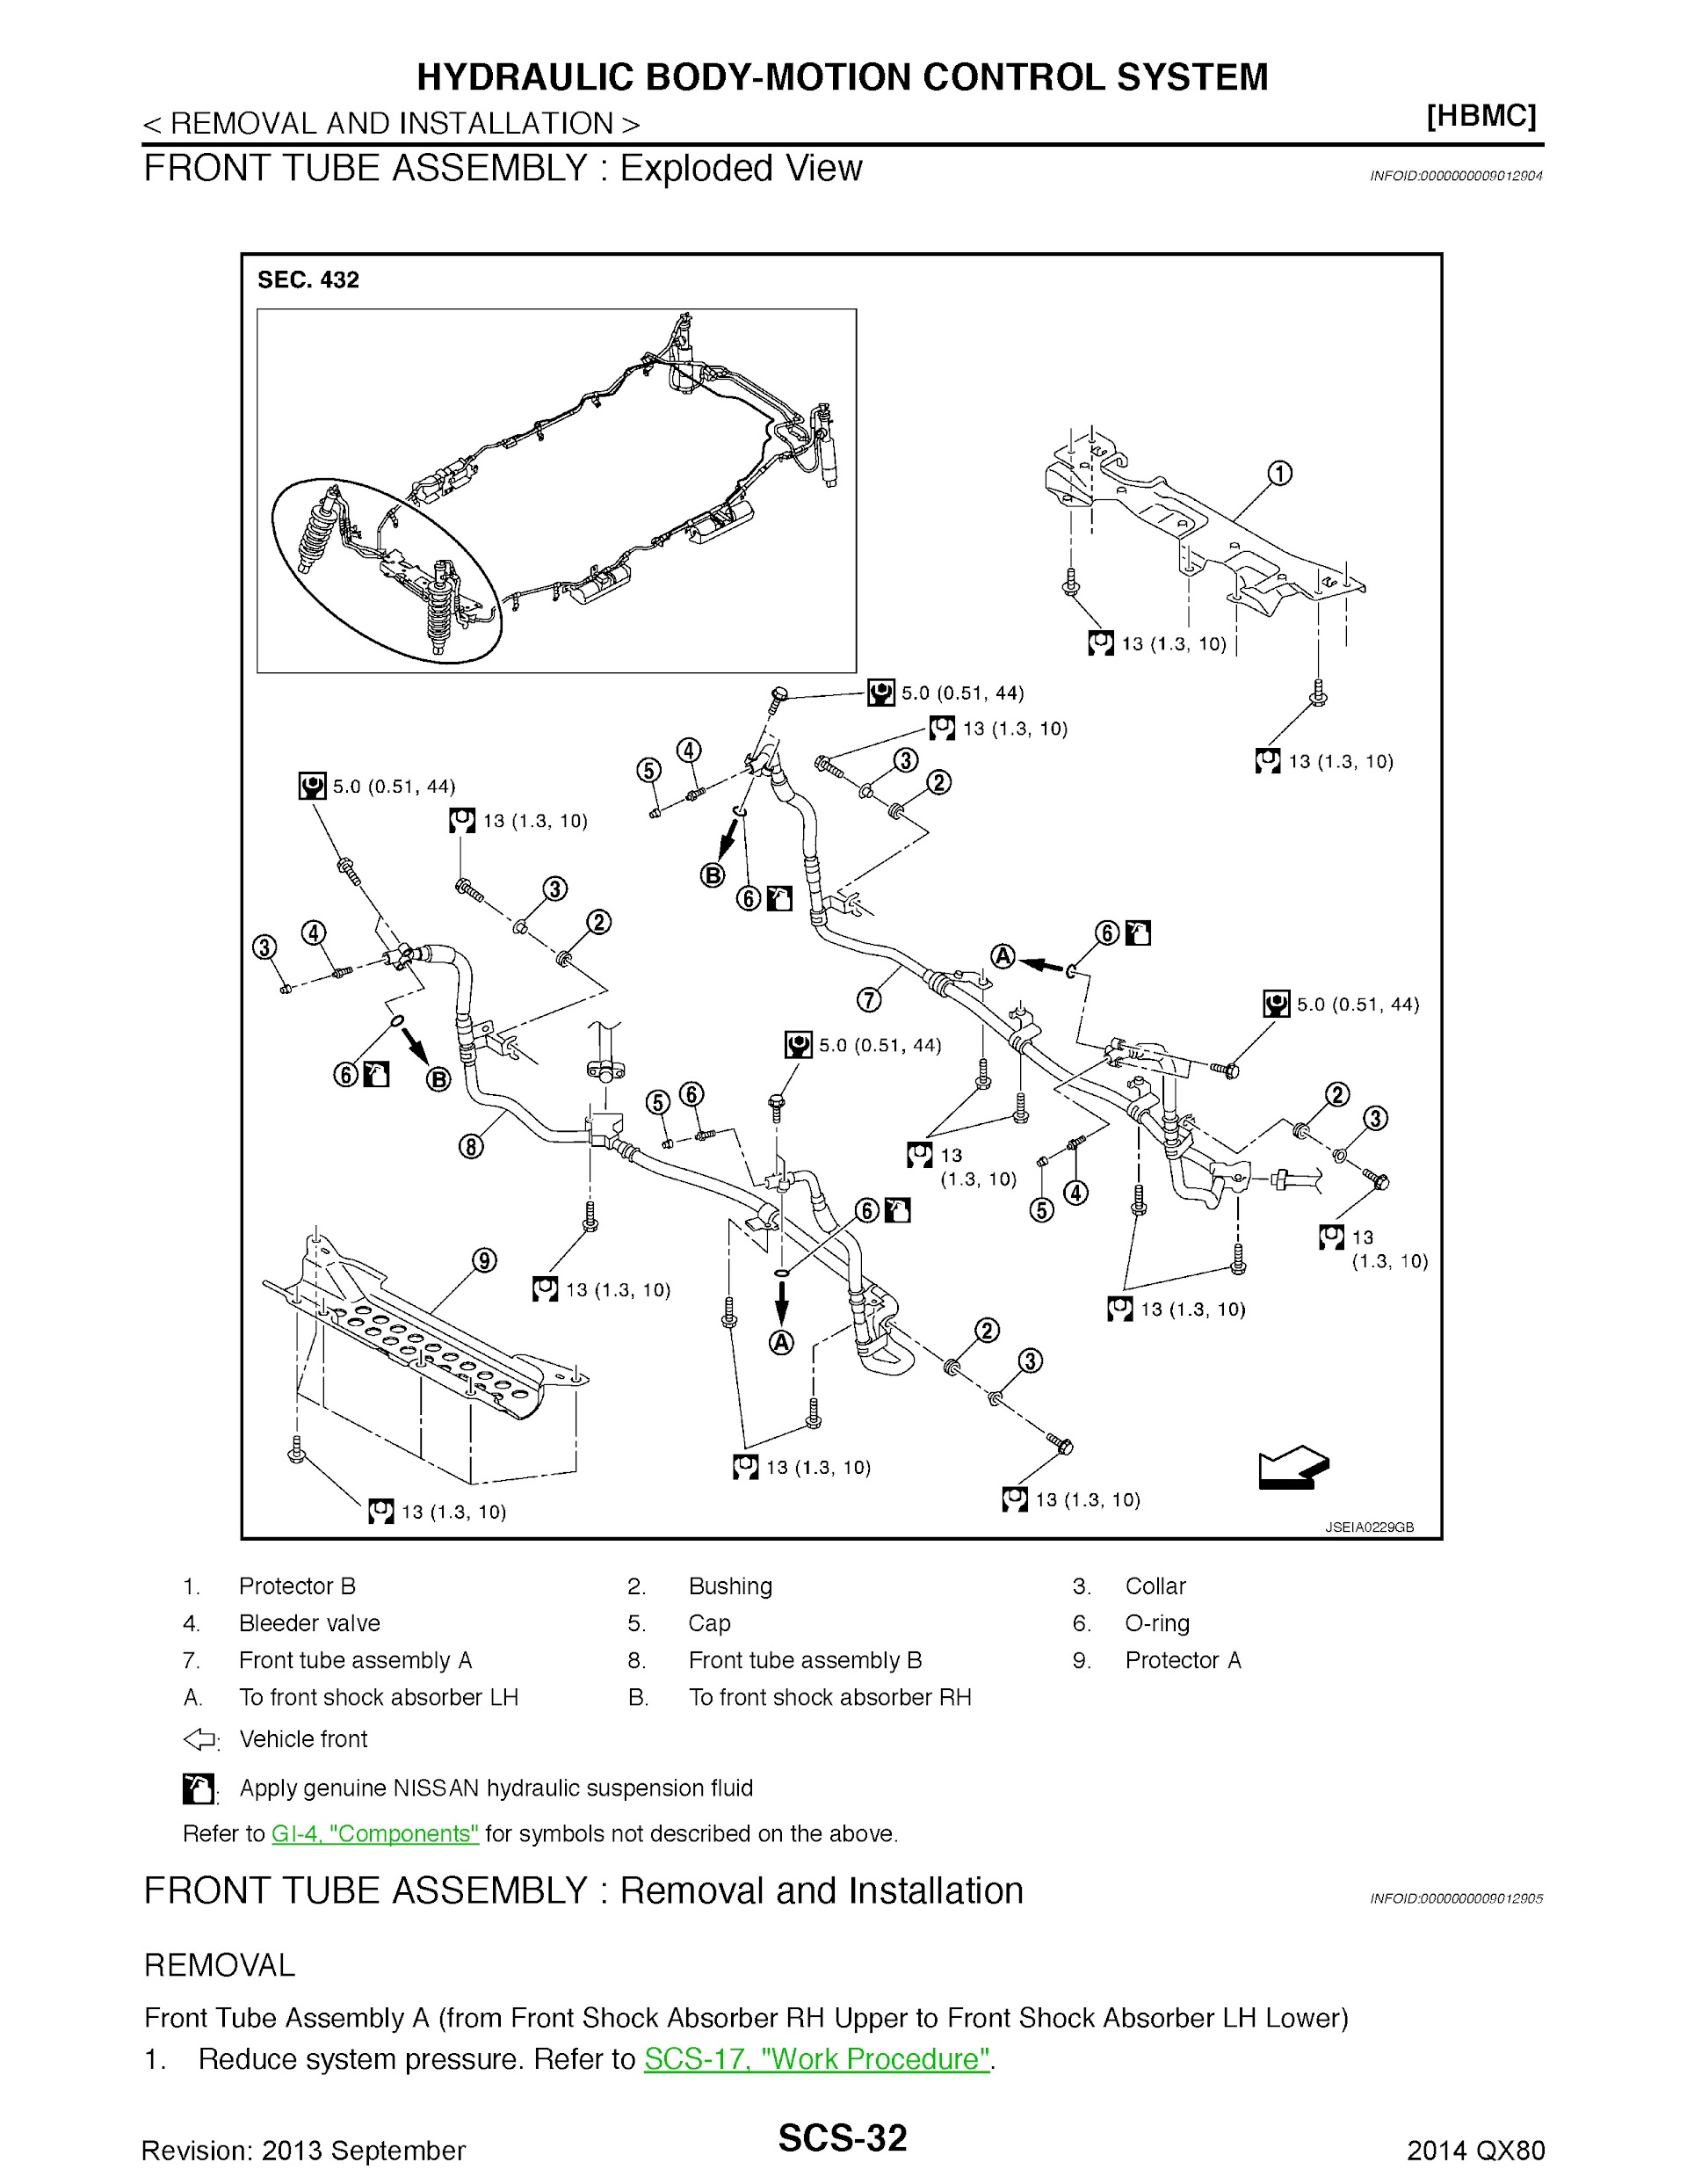 2014 Infiniti QX80 Repair Manual, Hydraulic Body-Motion Control System